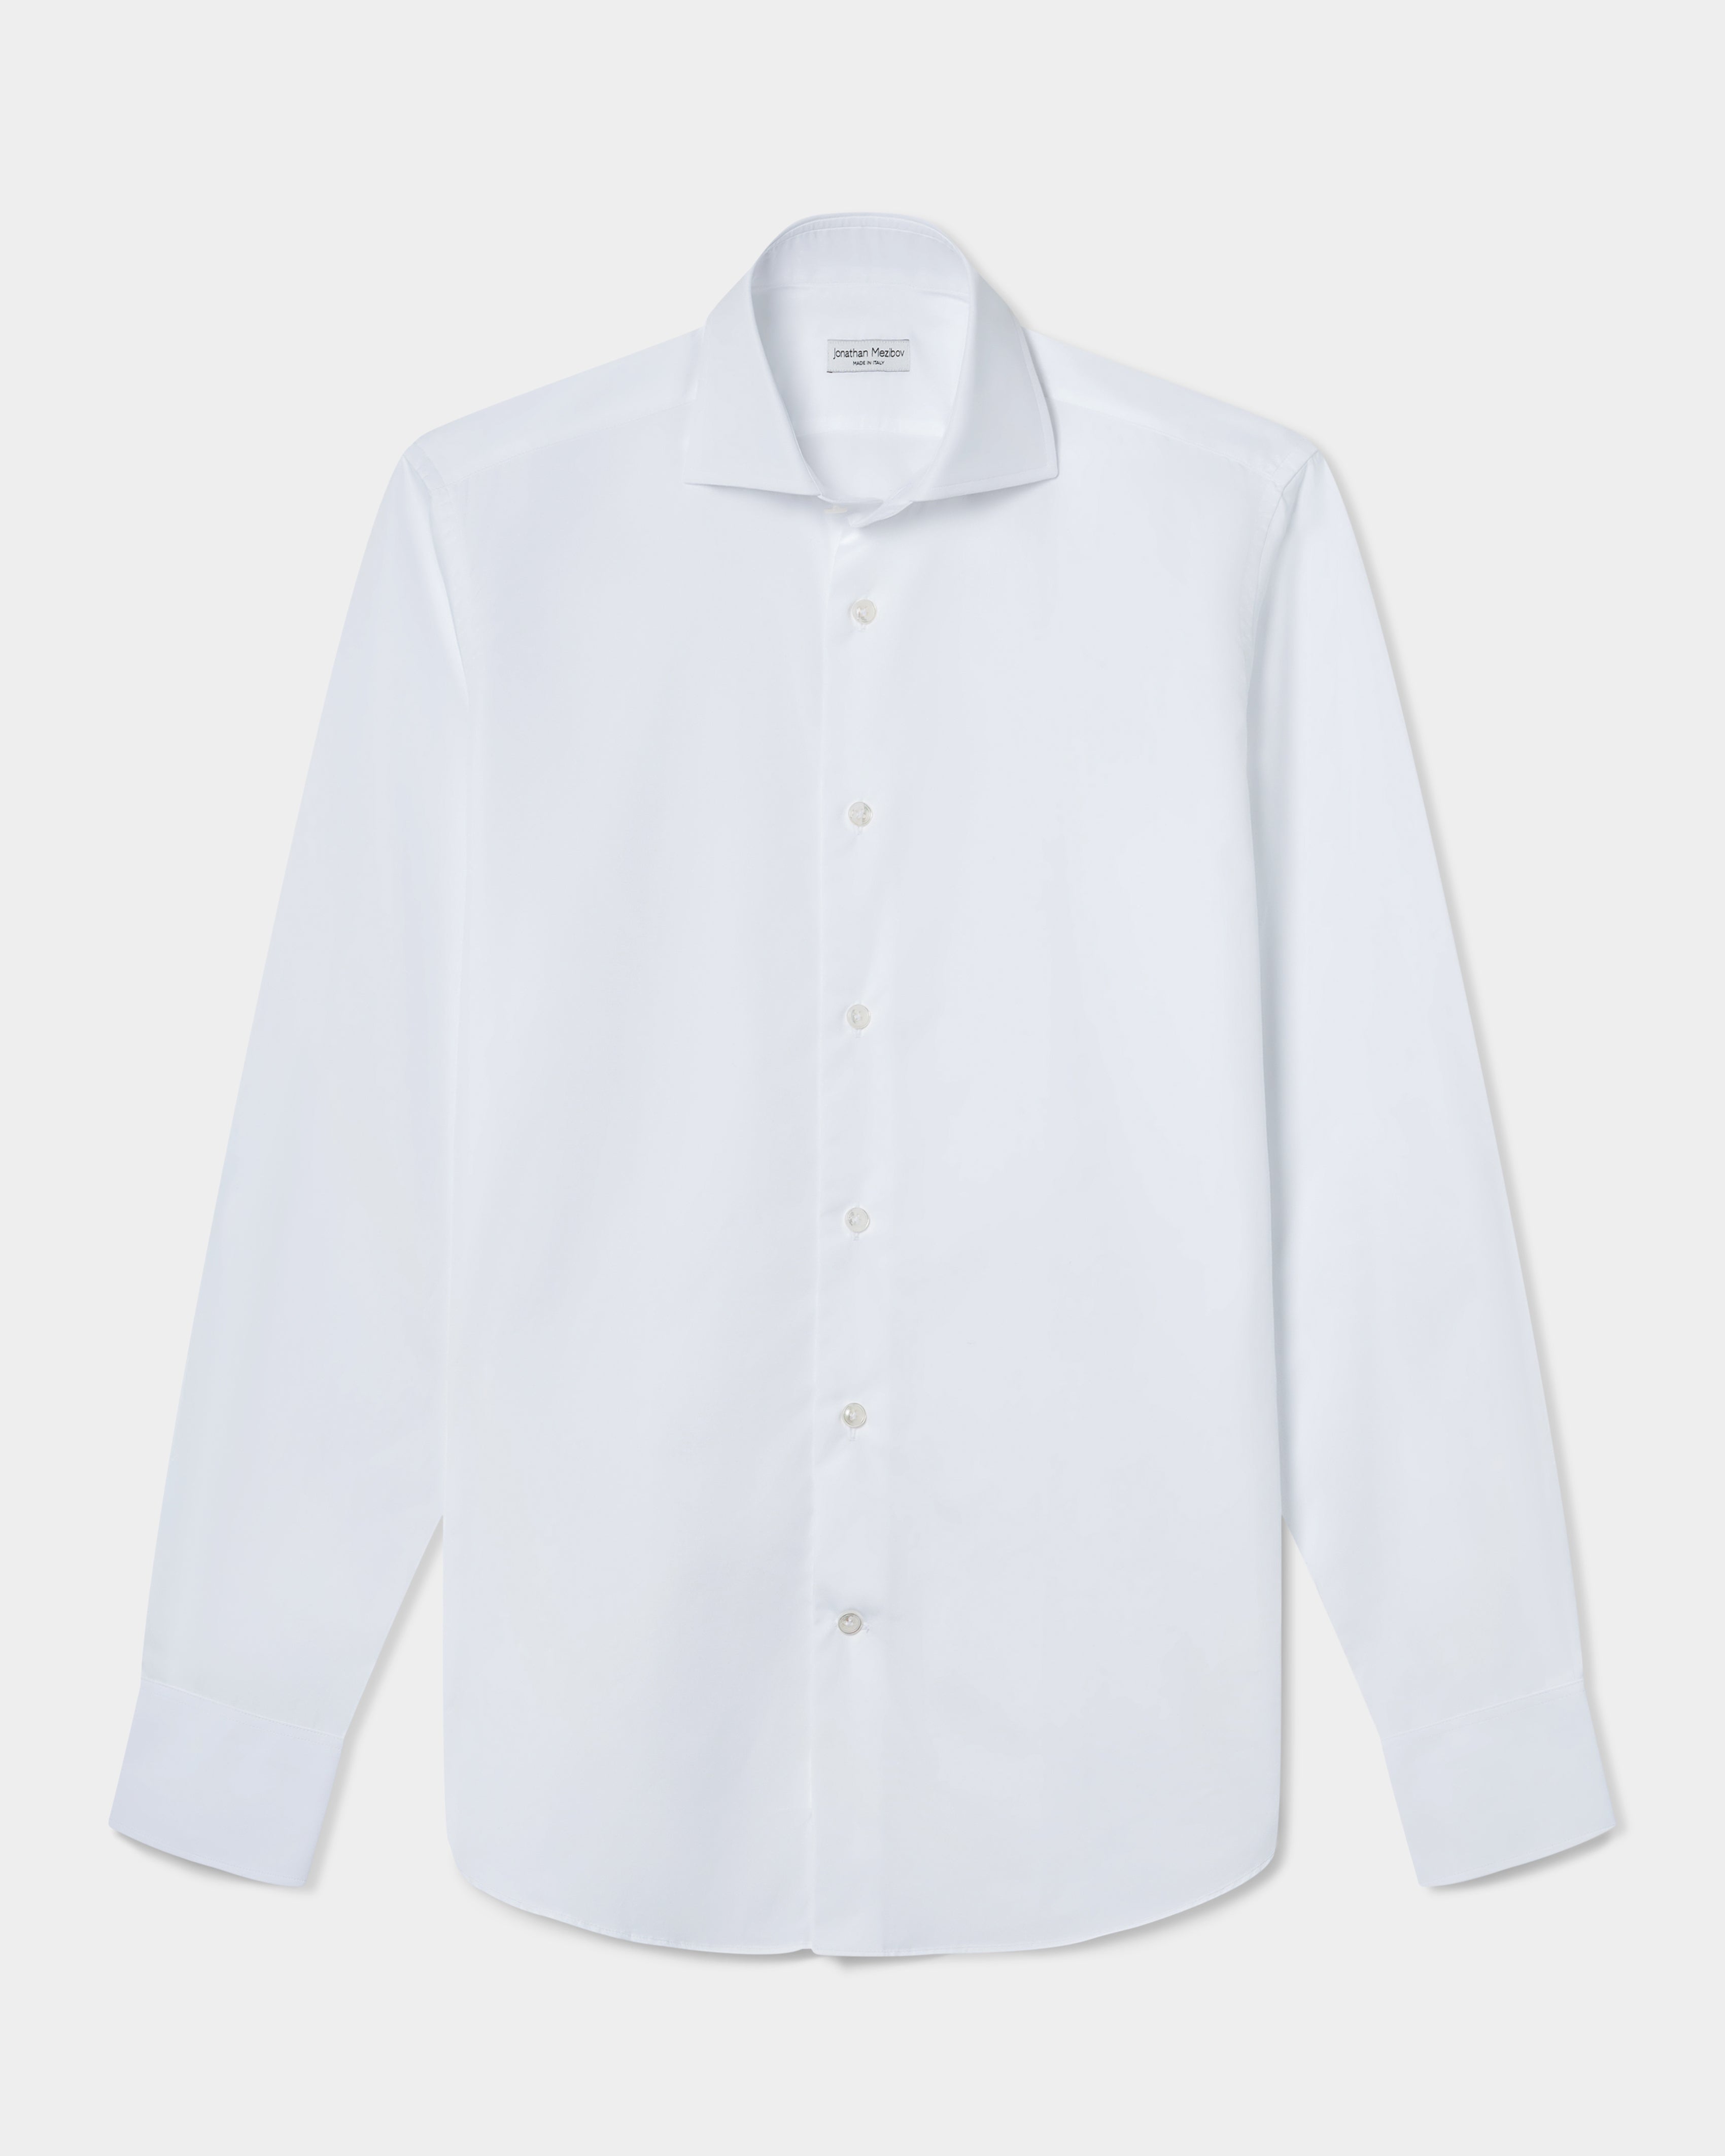 Carmichael Poplin Shirt - Made to Order